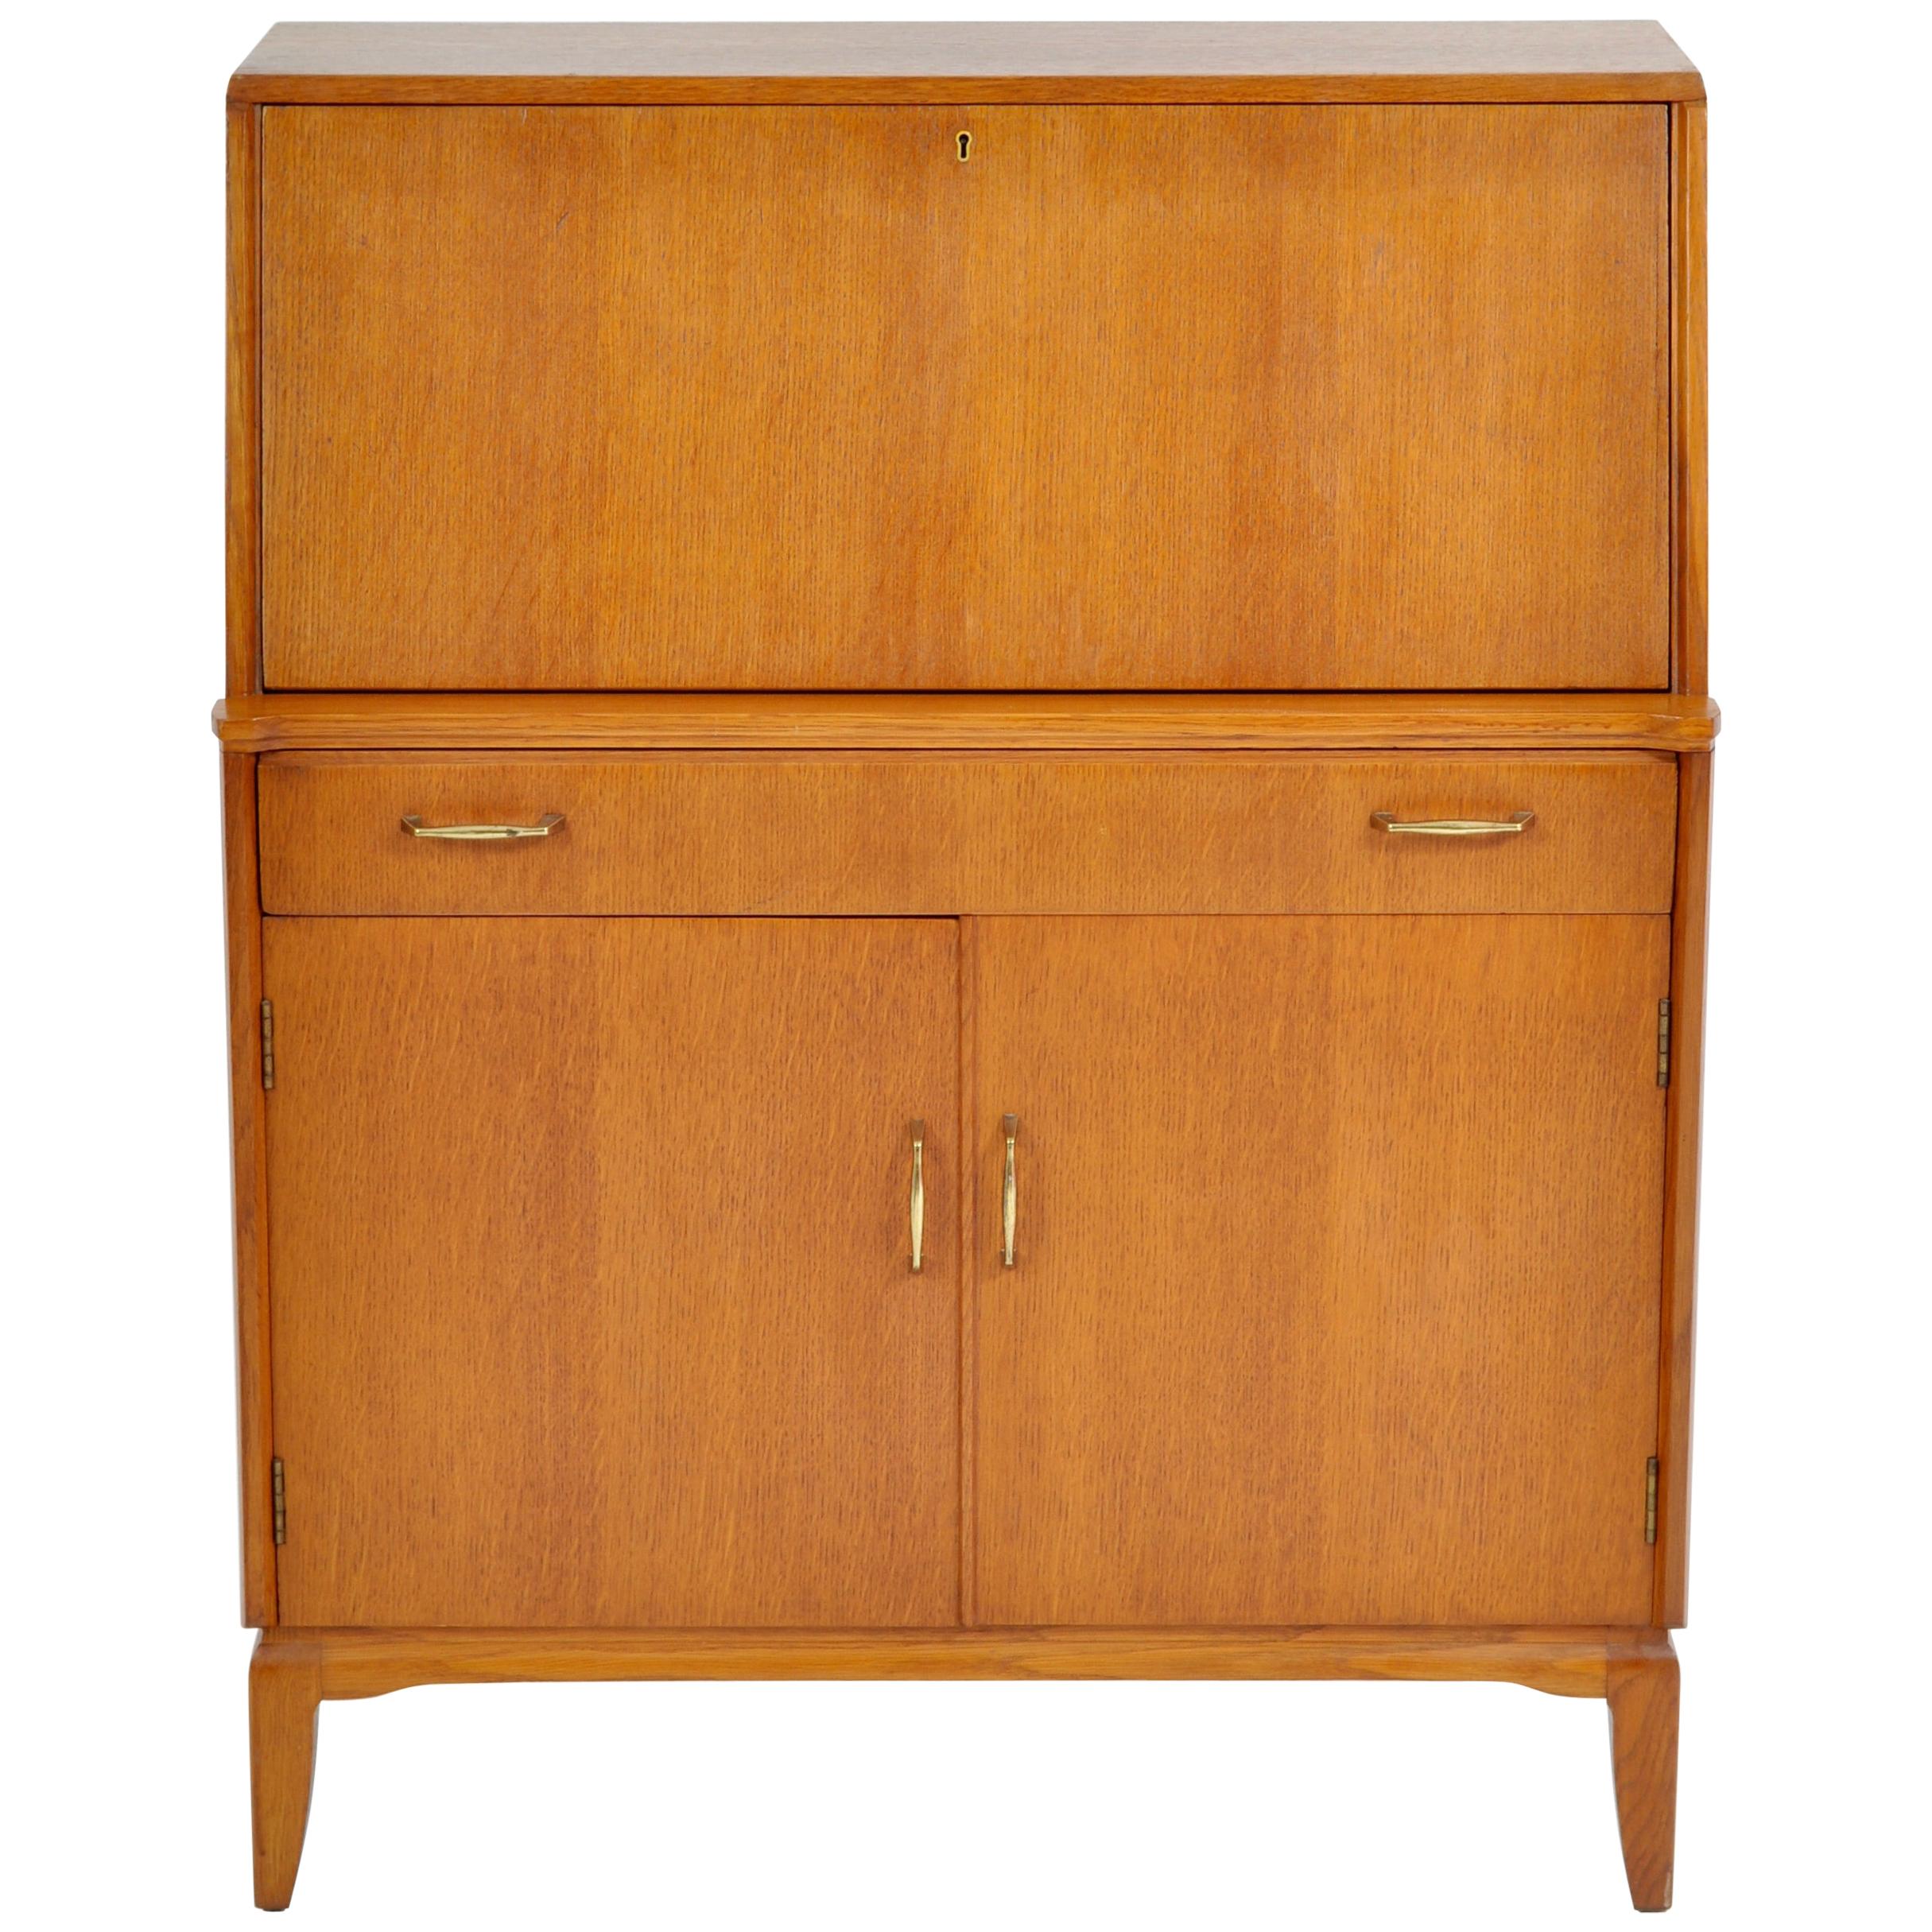 Mid-Century Modern Danish Style Teak Secretary Desk/Cabinet by Lebus Furniture